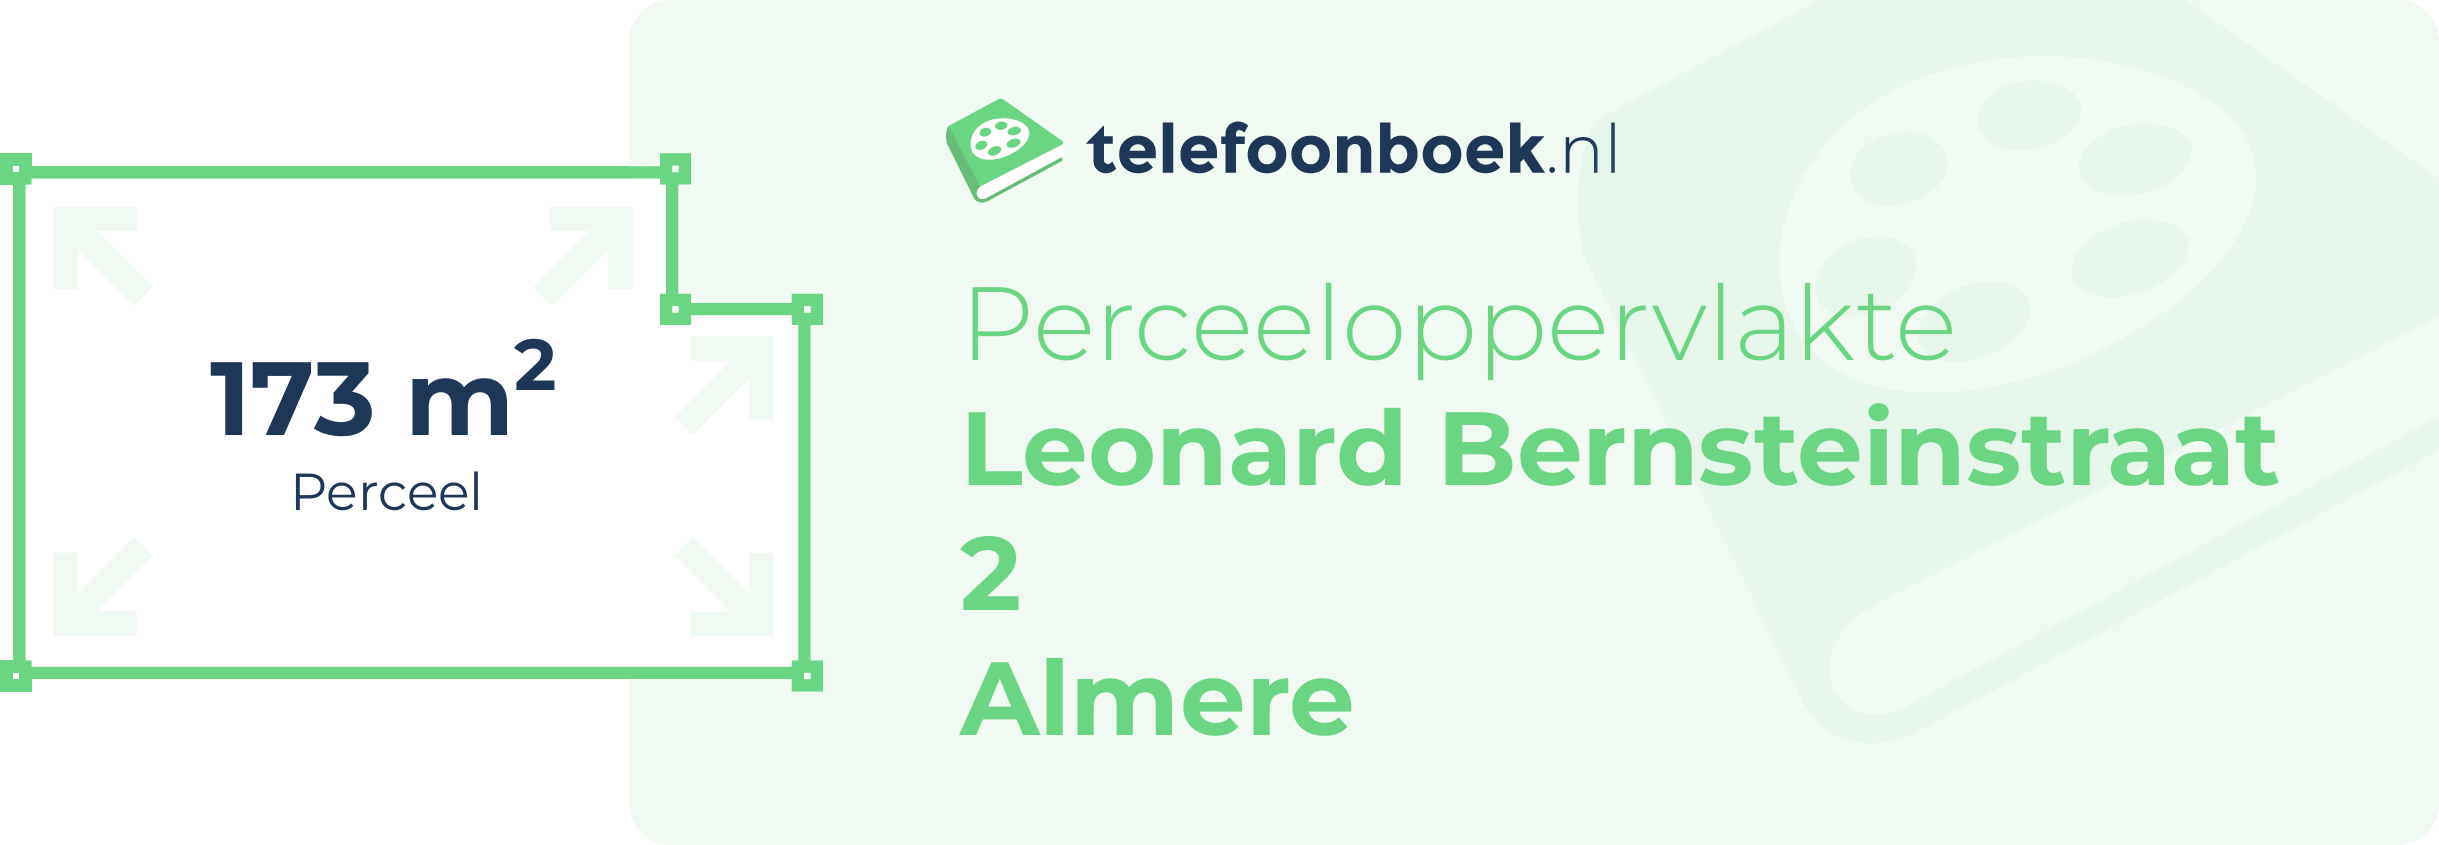 Perceeloppervlakte Leonard Bernsteinstraat 2 Almere